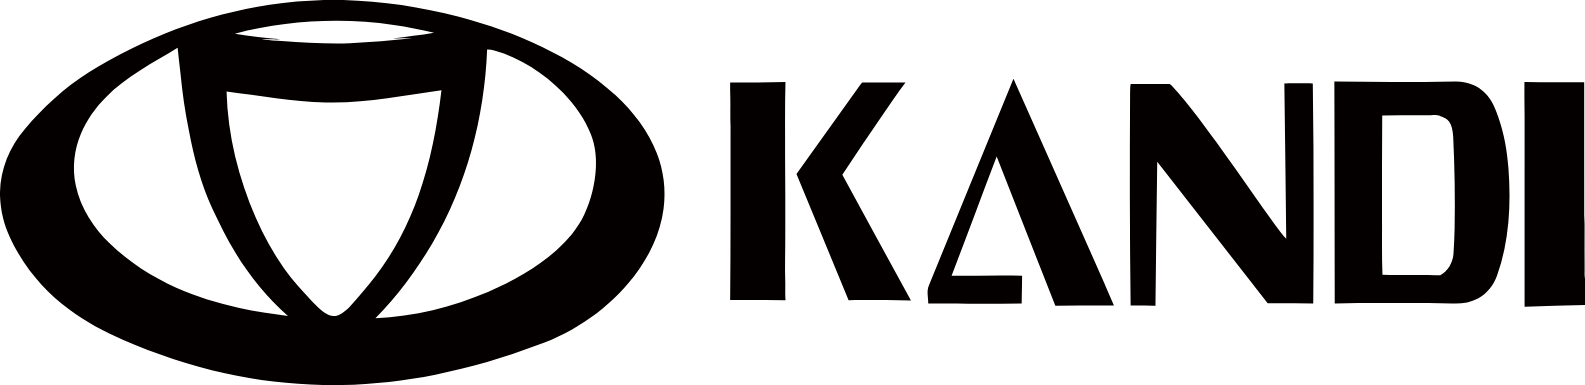 Kandi Technologies Group logo large (transparent PNG)